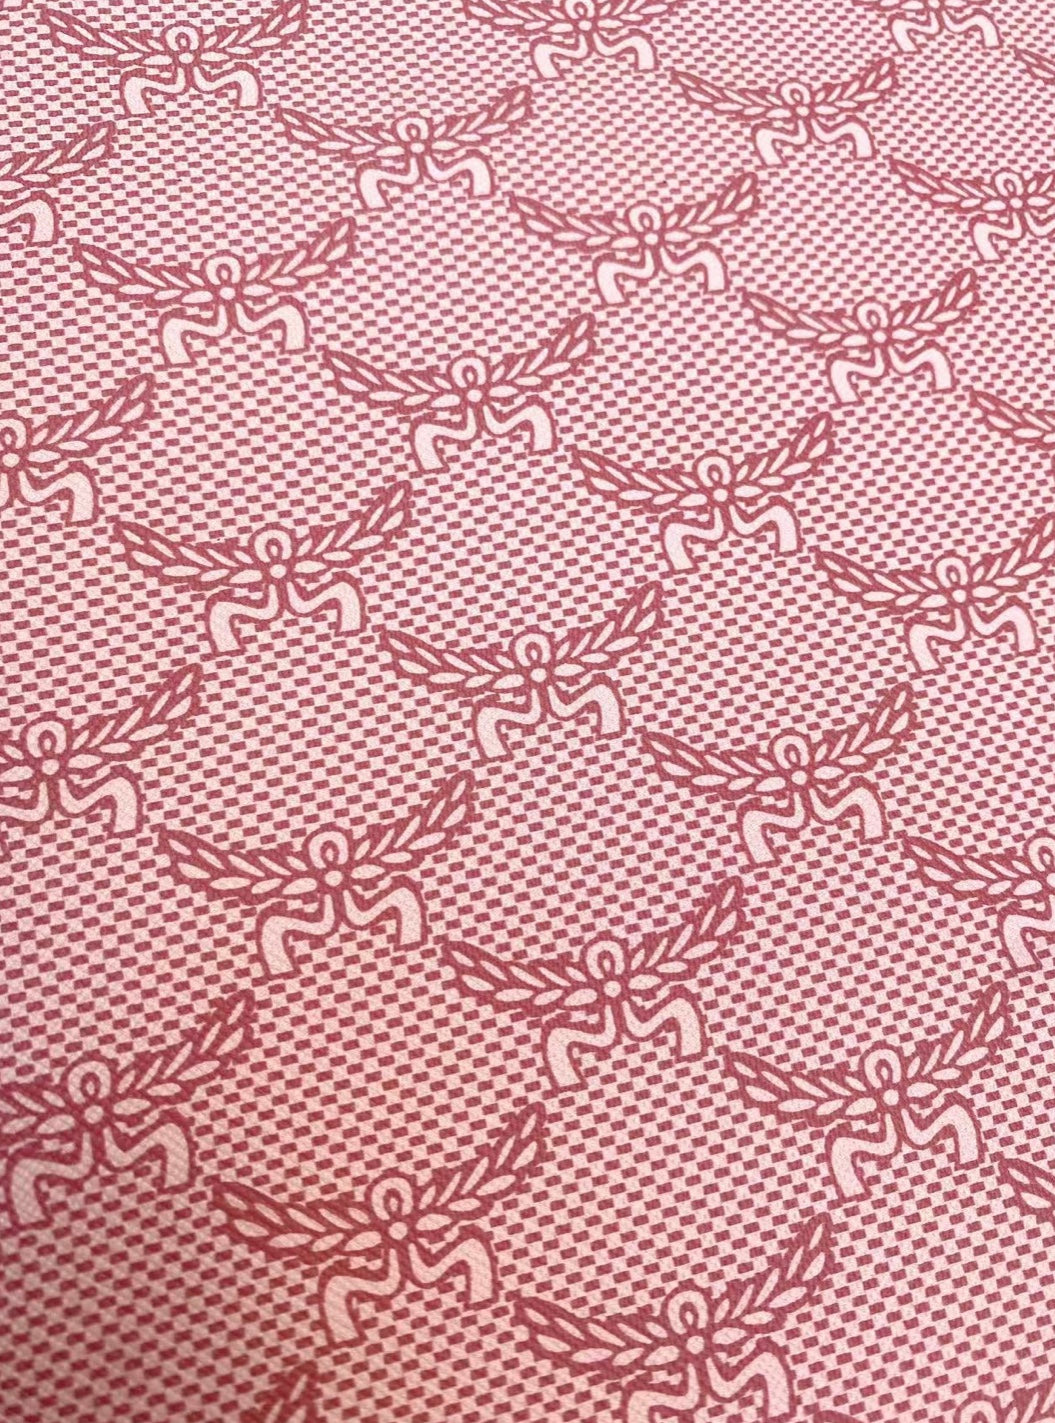 Hot Sale Pink Mcm Vinyl Leather for Custom Bags DIY Crafts